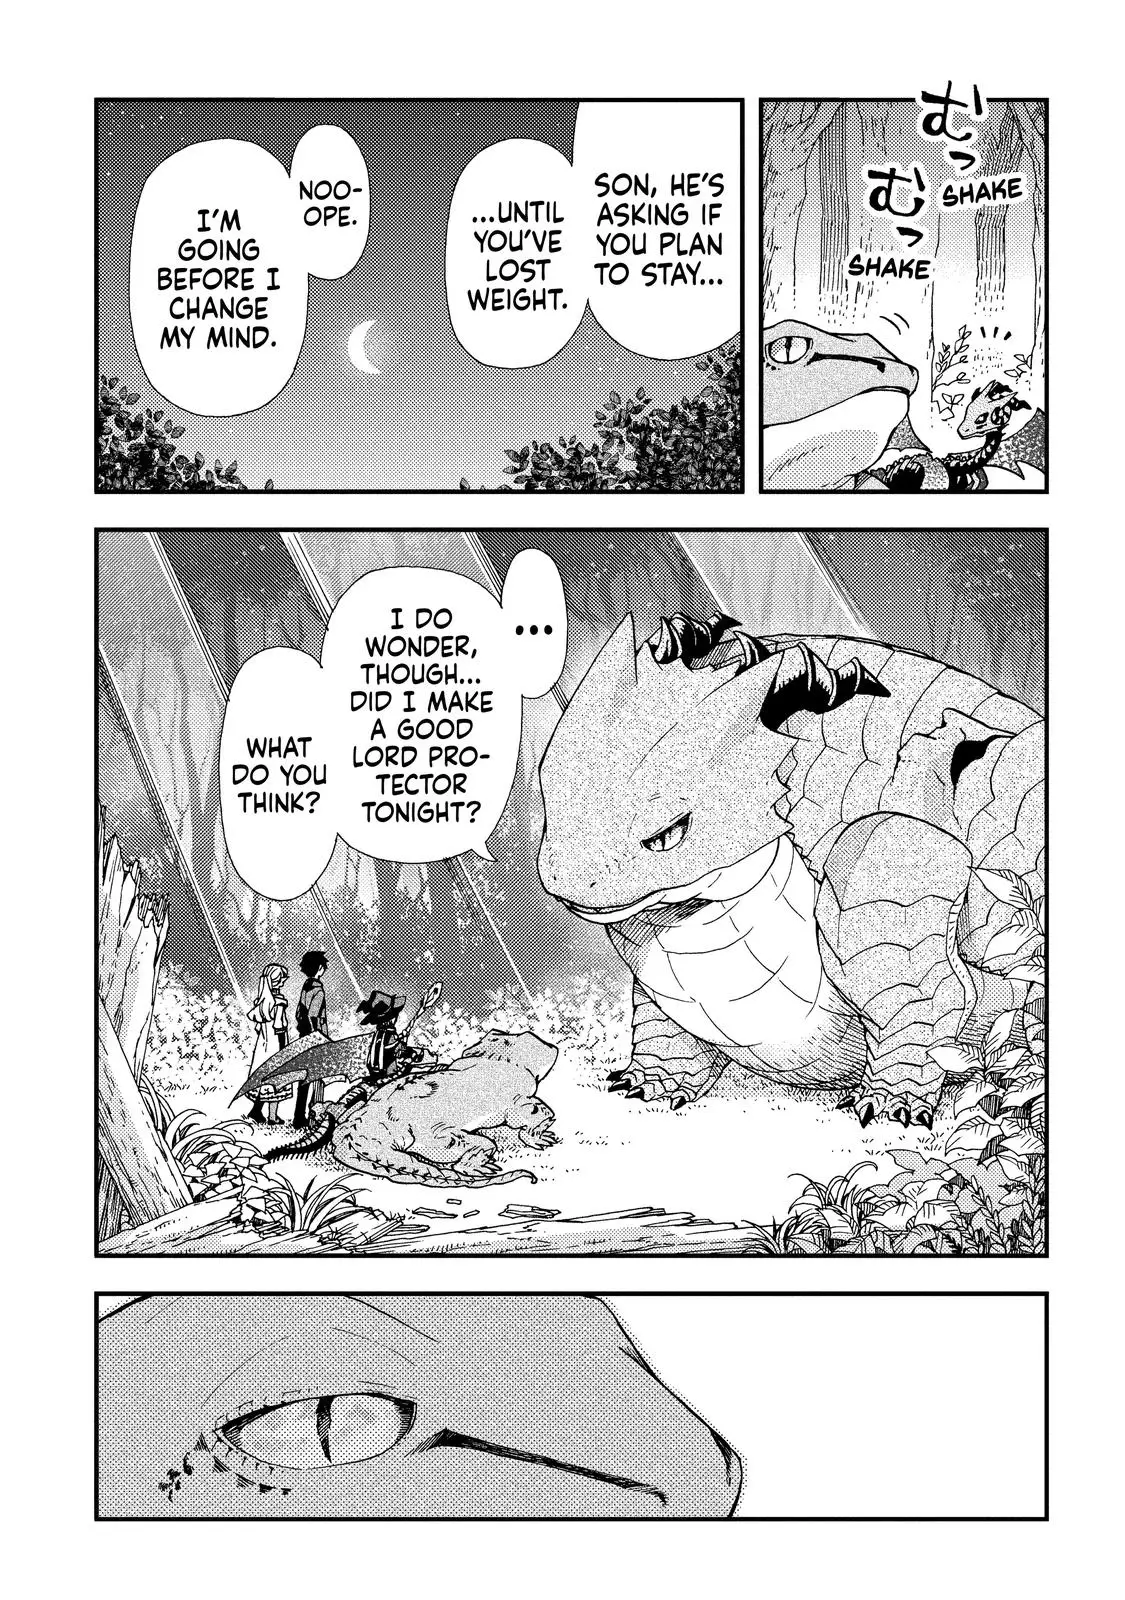 Hone Dragon No Mana Musume - 18 page 23-024f6eb5